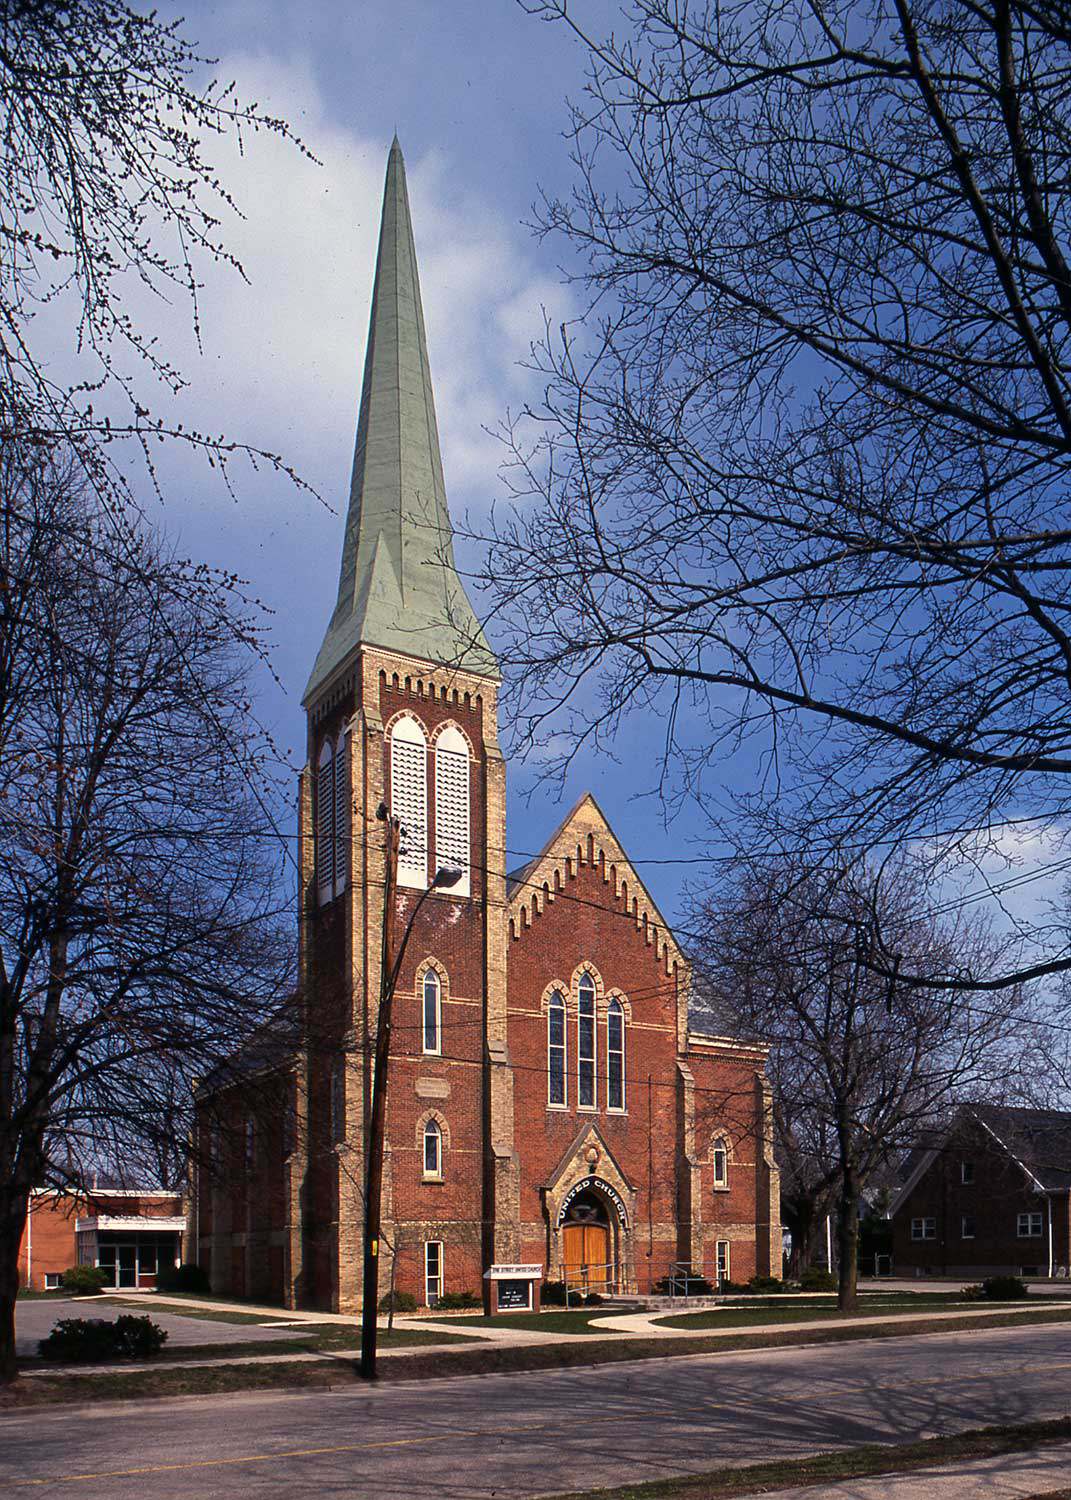 The Erie Street Church, Ridgetown, 2004 (Photo courtesy of Professor Malcolm Thurlby)